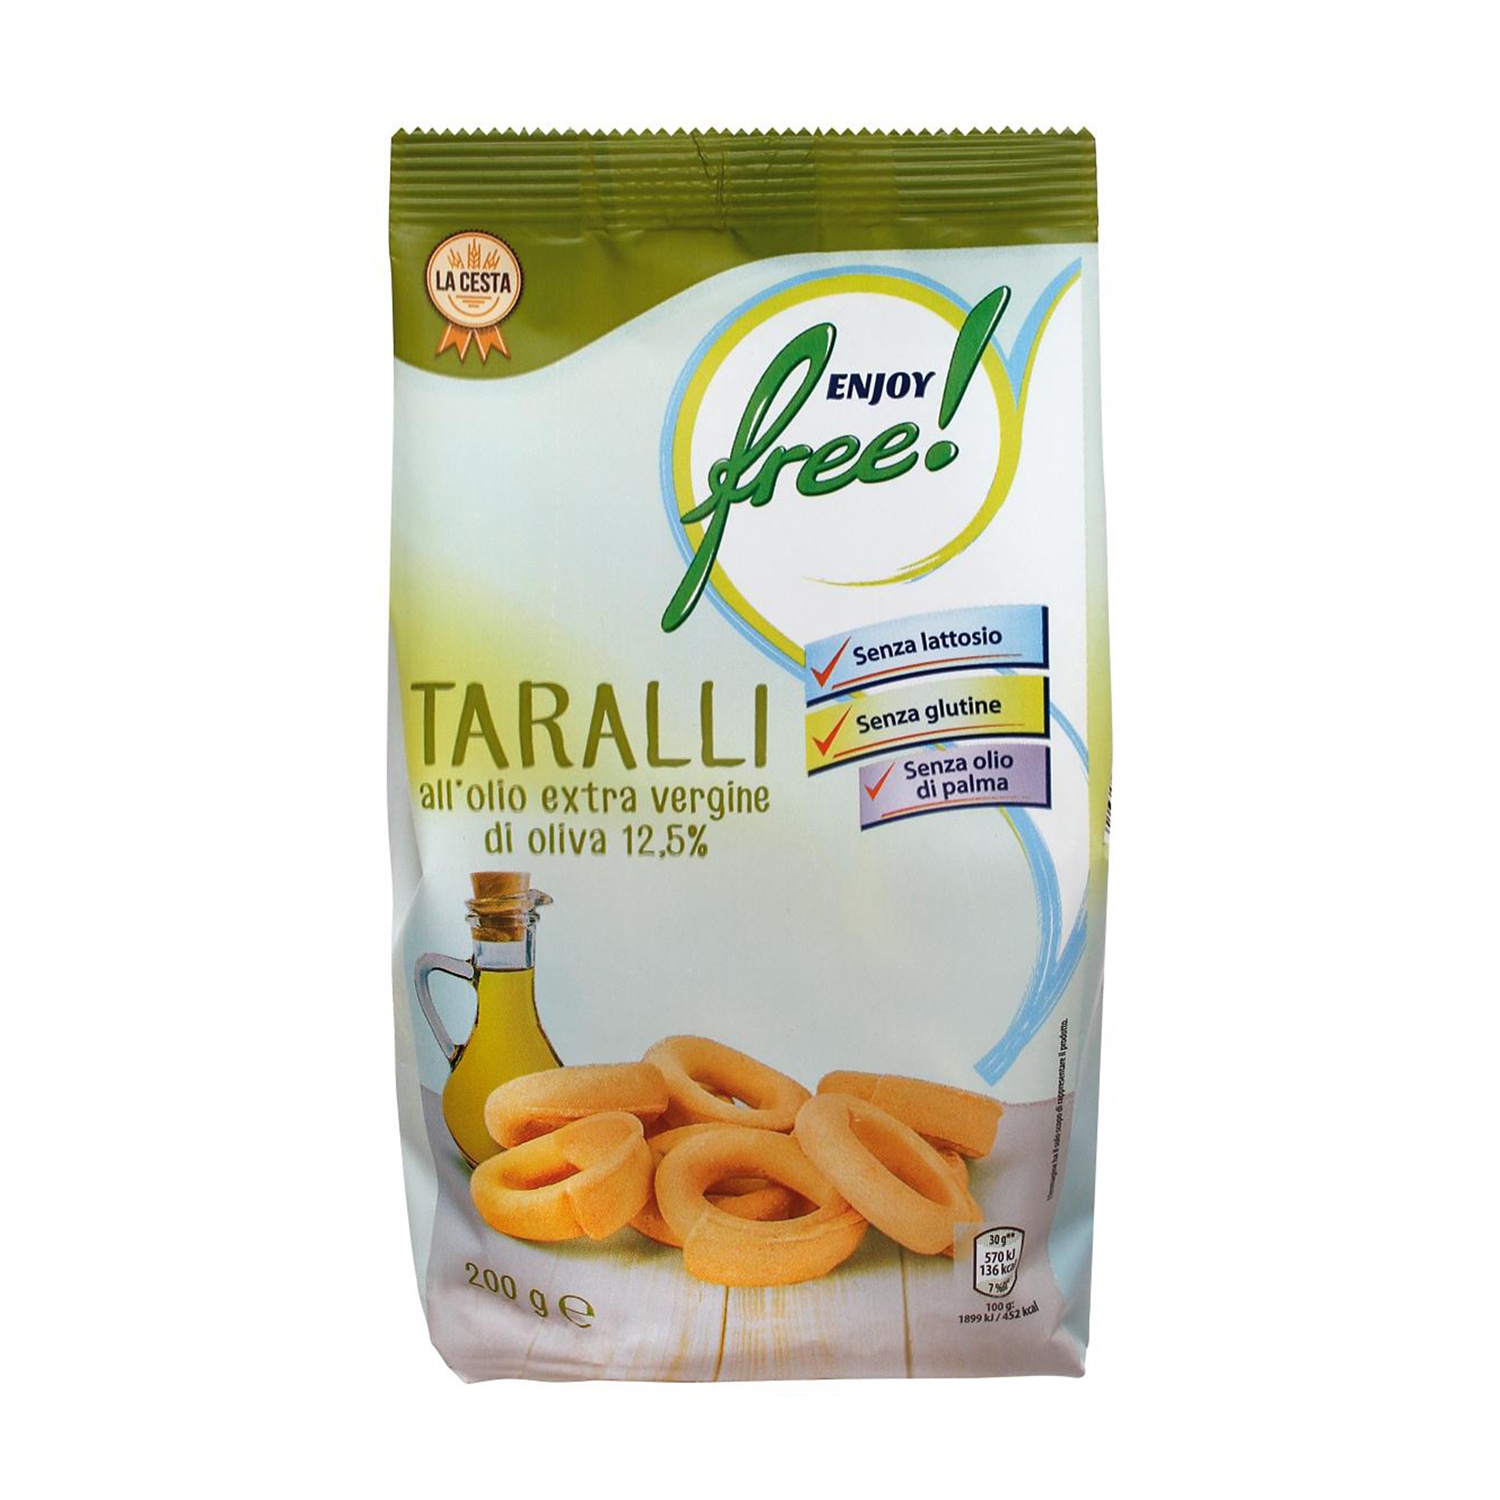 ENJOY FREE! Taralli senza glutine